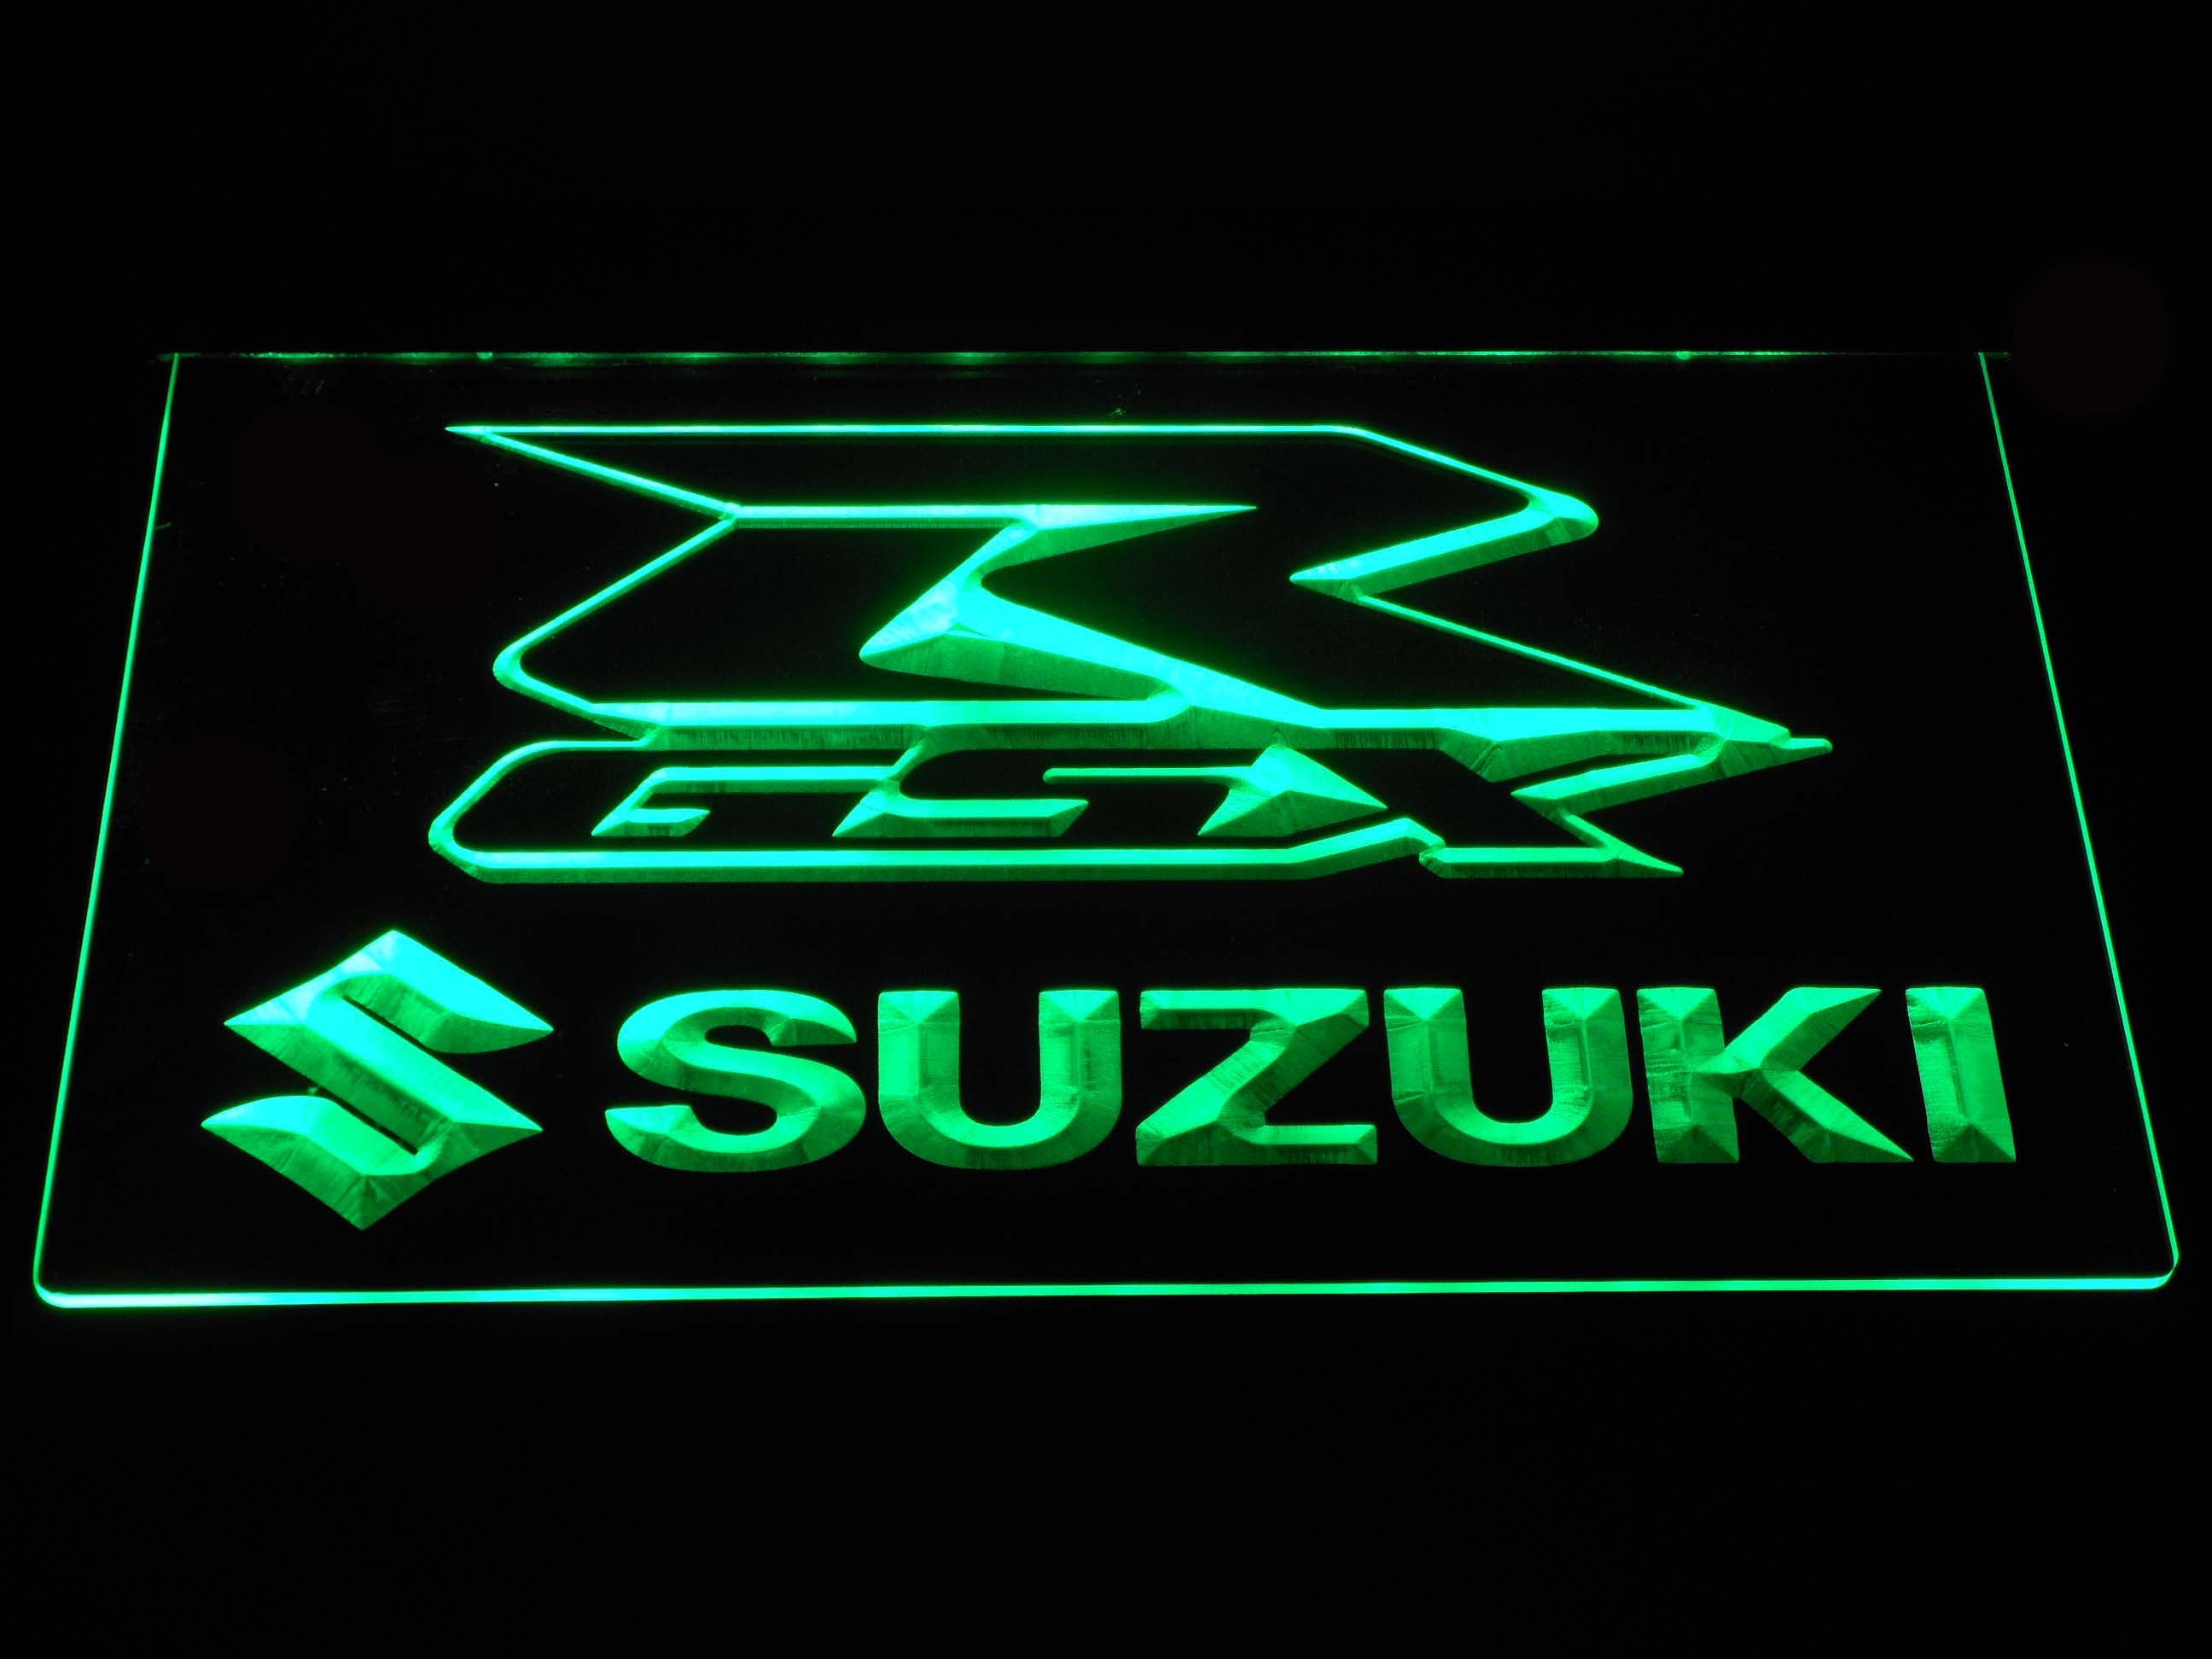 Suzuki Gsx-R Motorcycle Neon LED Light Sign